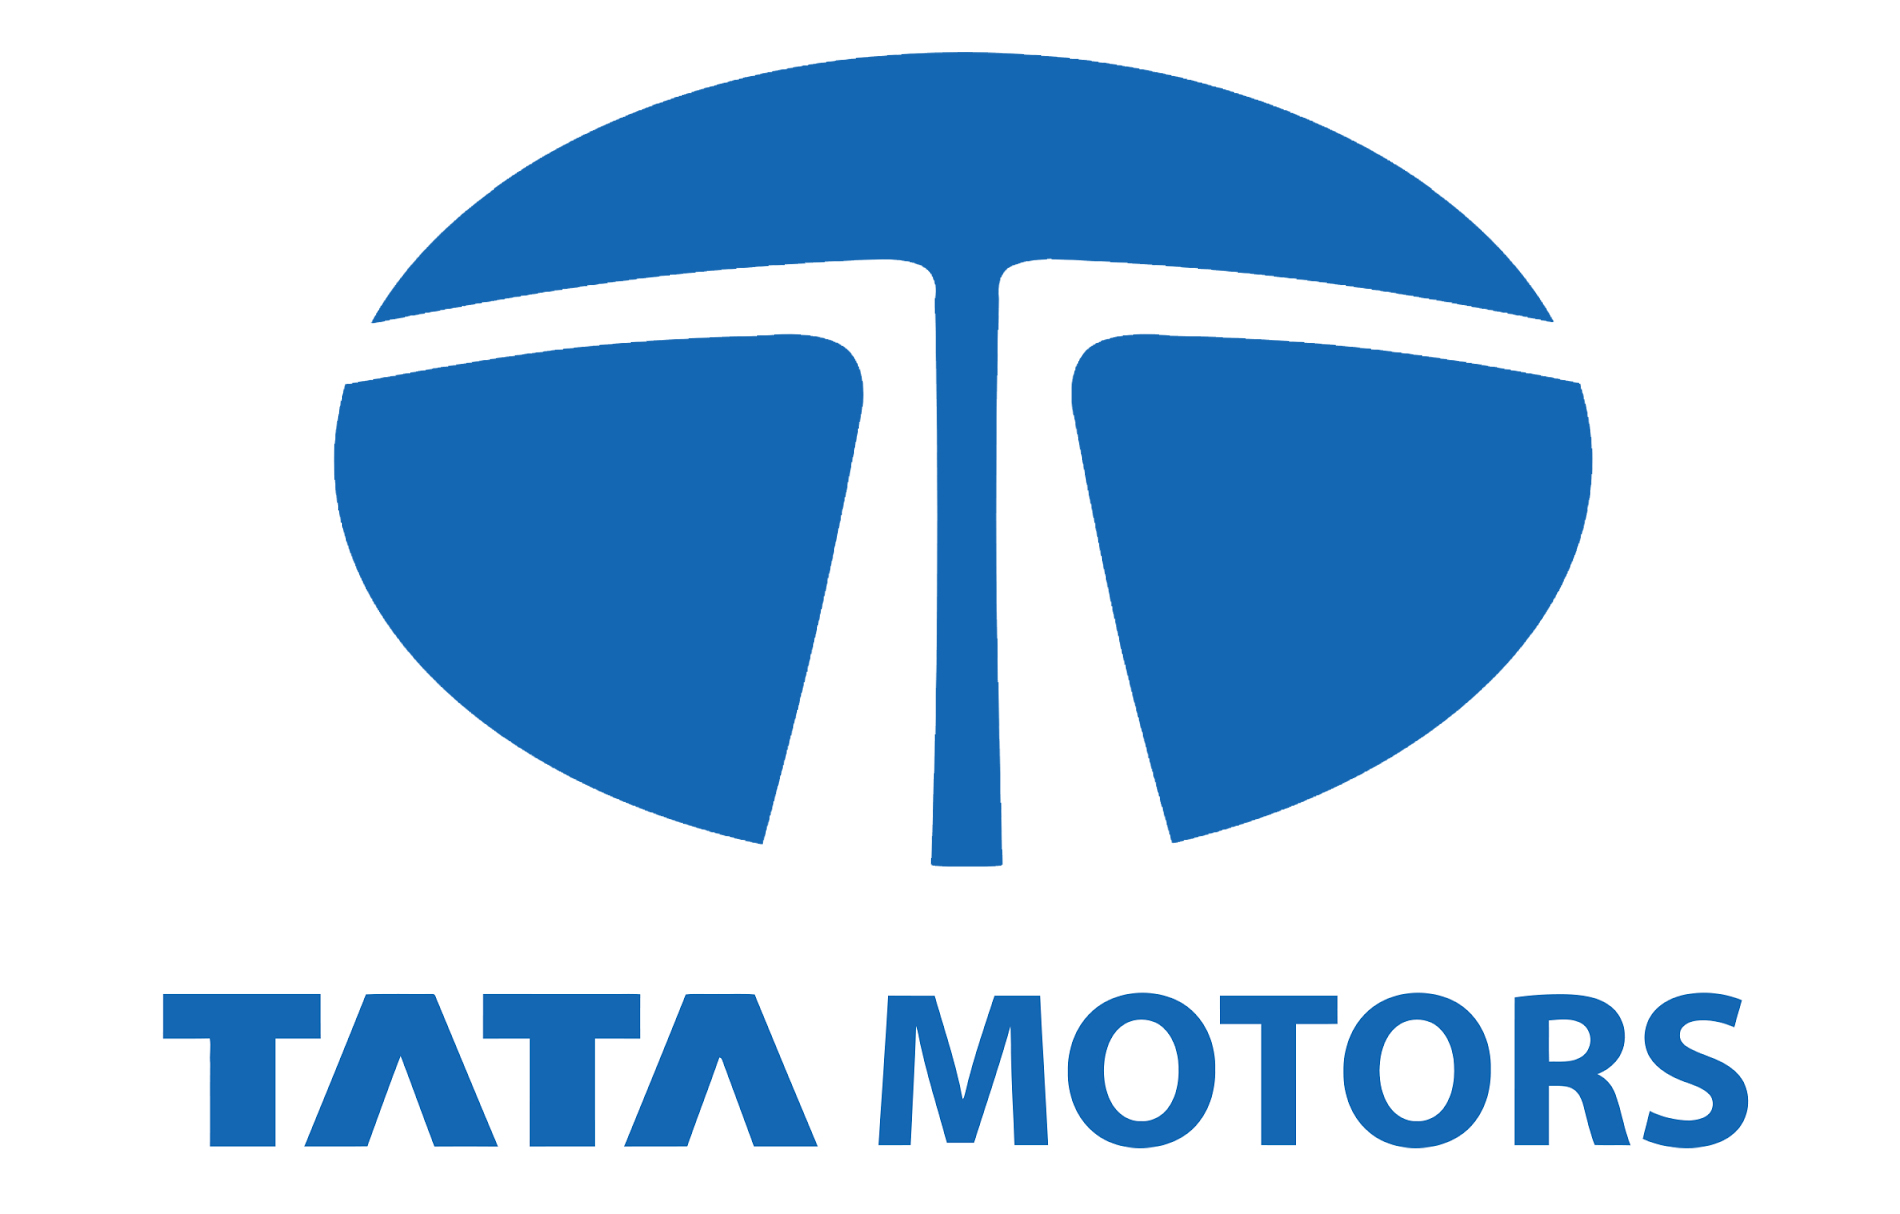 Tata Motors Cars Showroom and Workshop - The True Sai Works - Logo